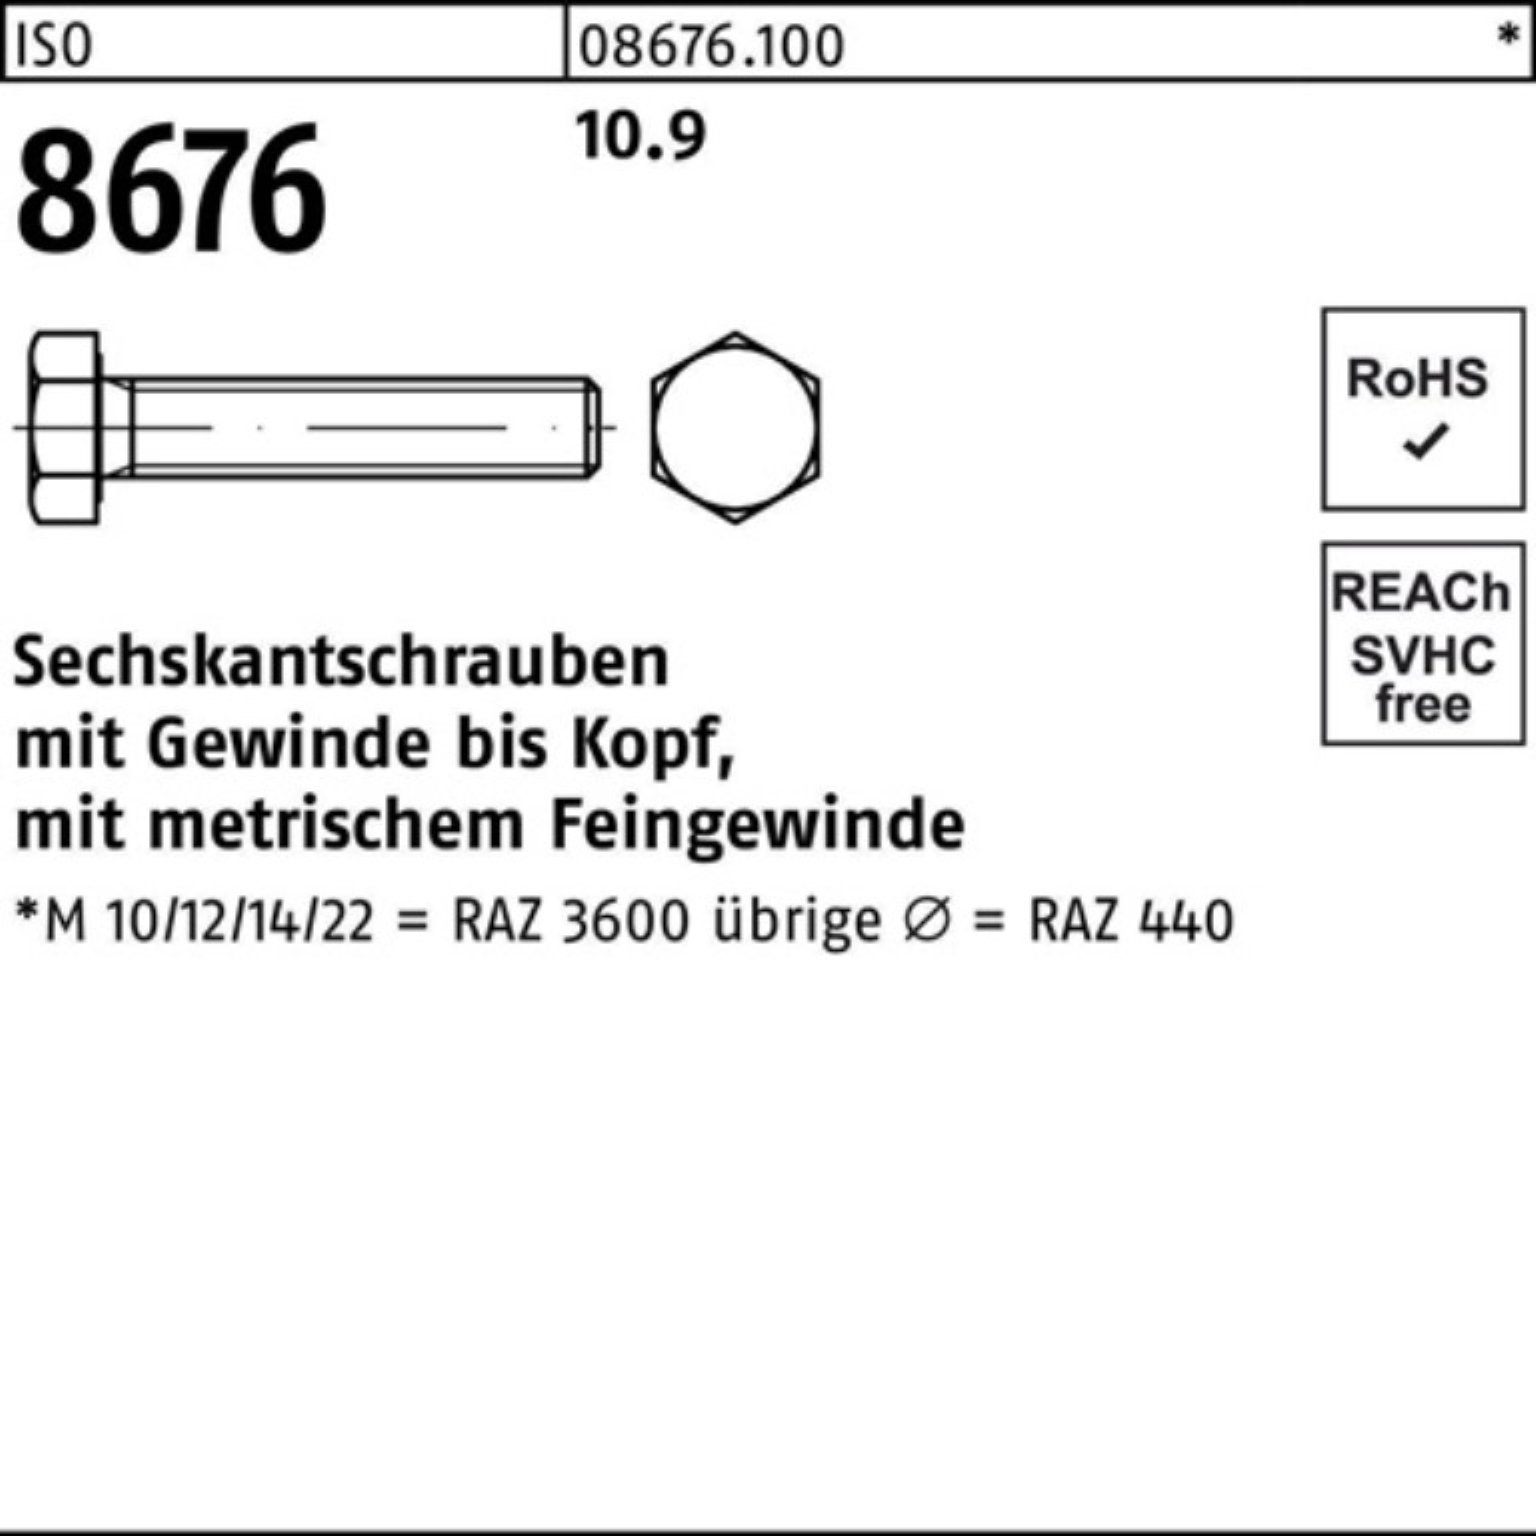 ISO Sechskantschraube M24x2x 8676 VG ISO Pack 25 Stück 10.9 50 Reyher 100er Sechskantschraube